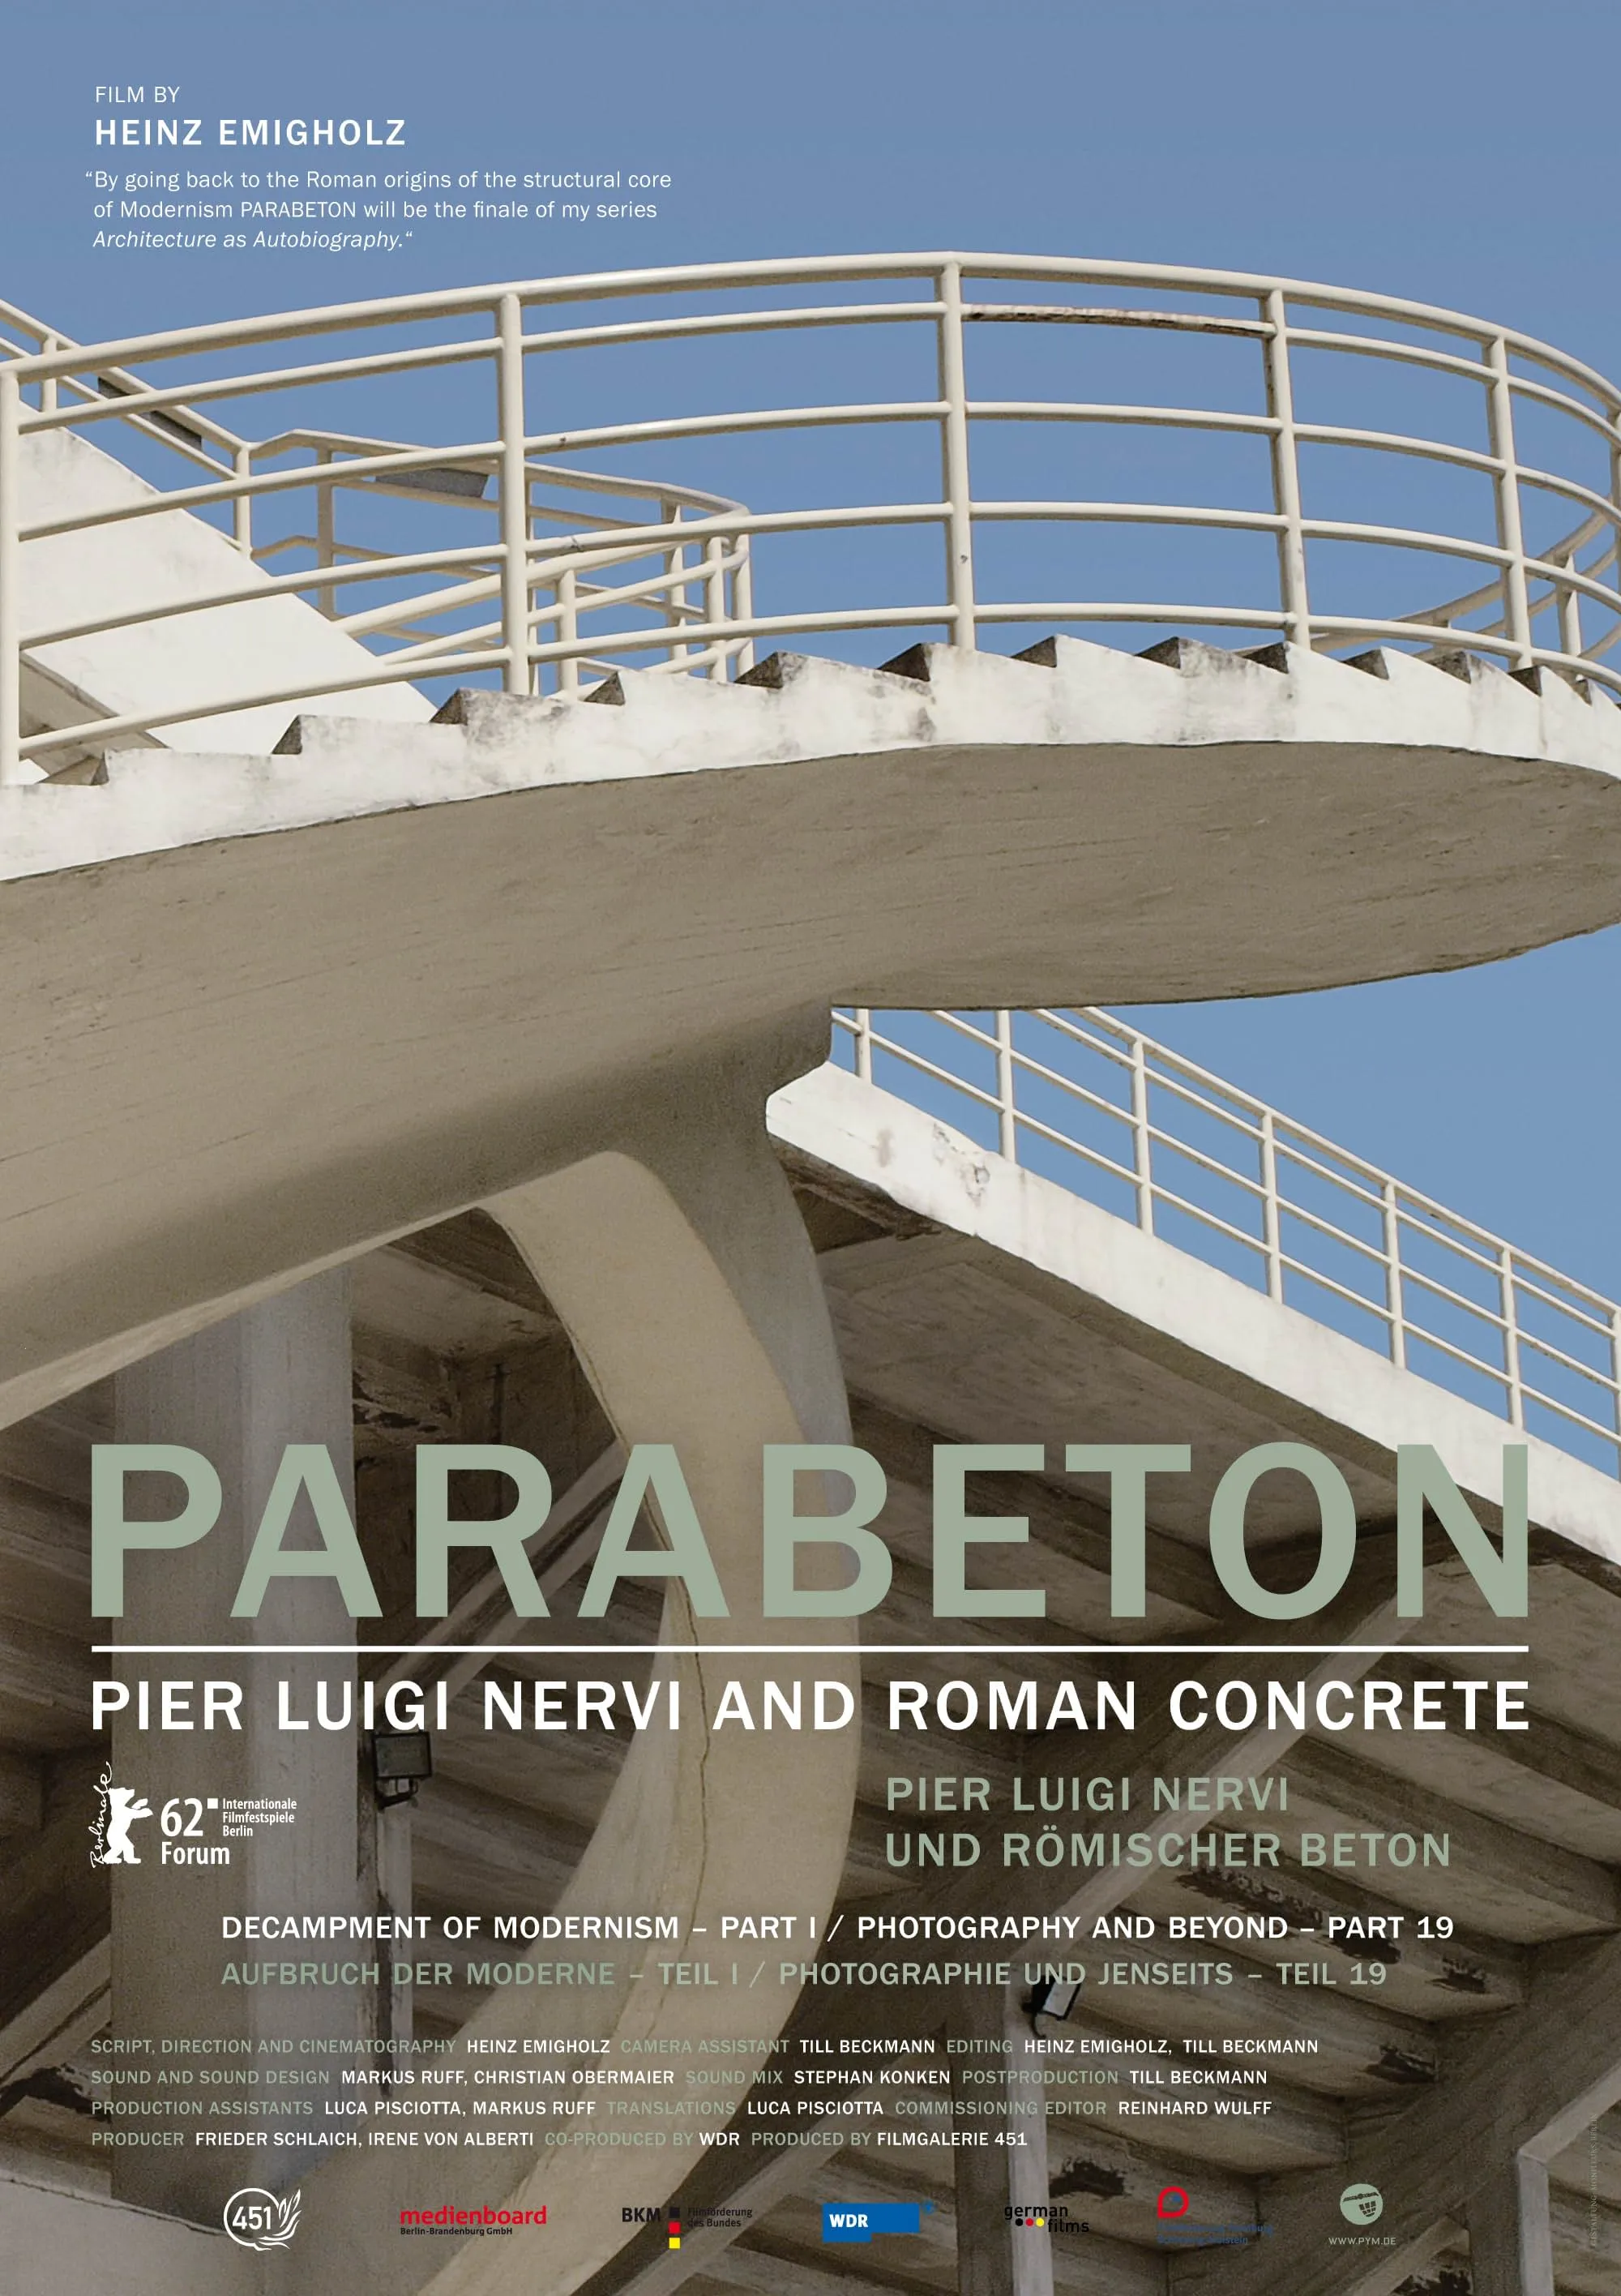     Parabeton - Pier Luigi Nervi i rzymski beton